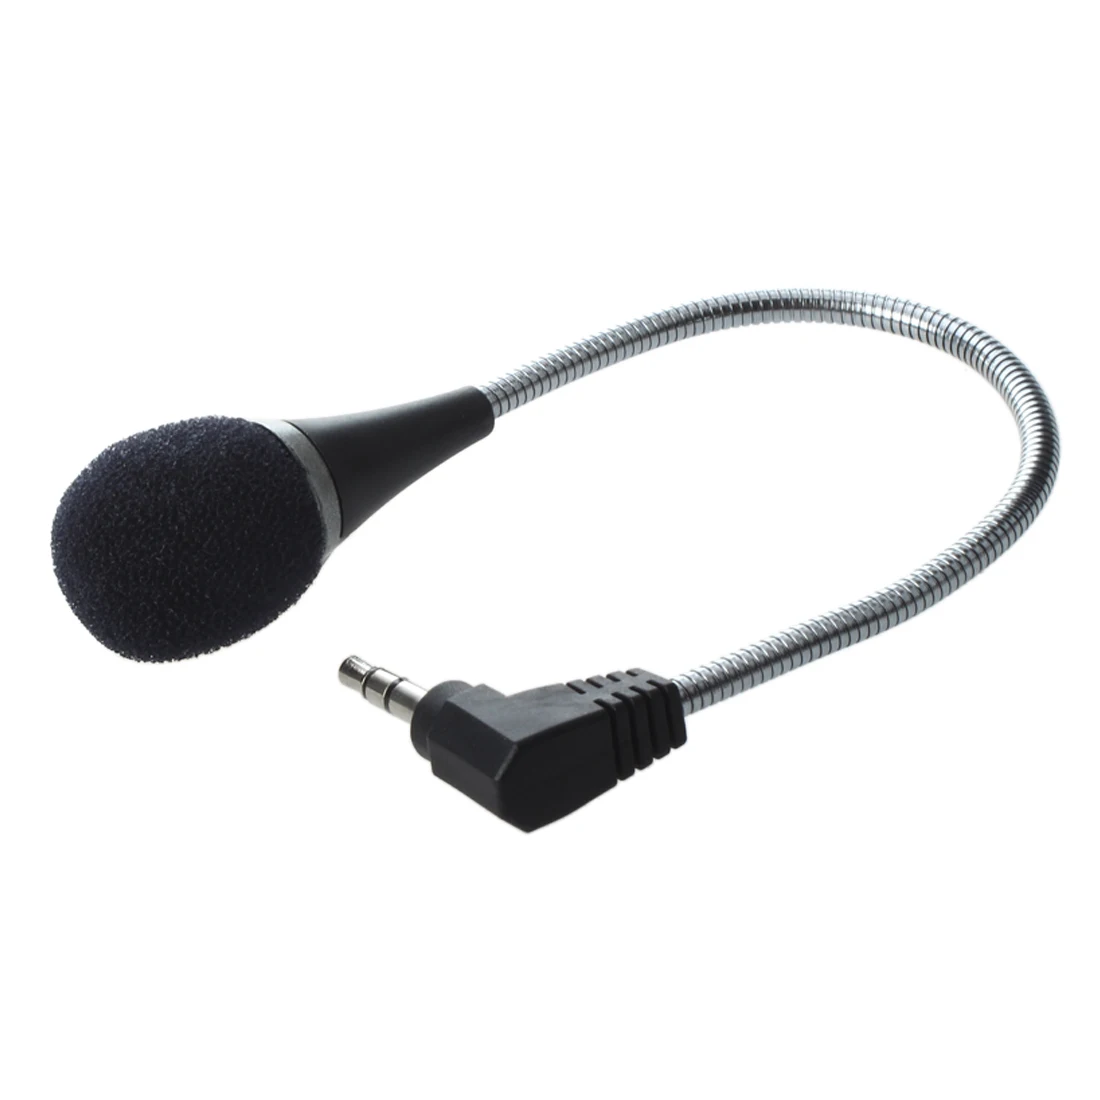 Гибкий мини-микрофон 3,5 мм для ПК/ноутбука/скайпа